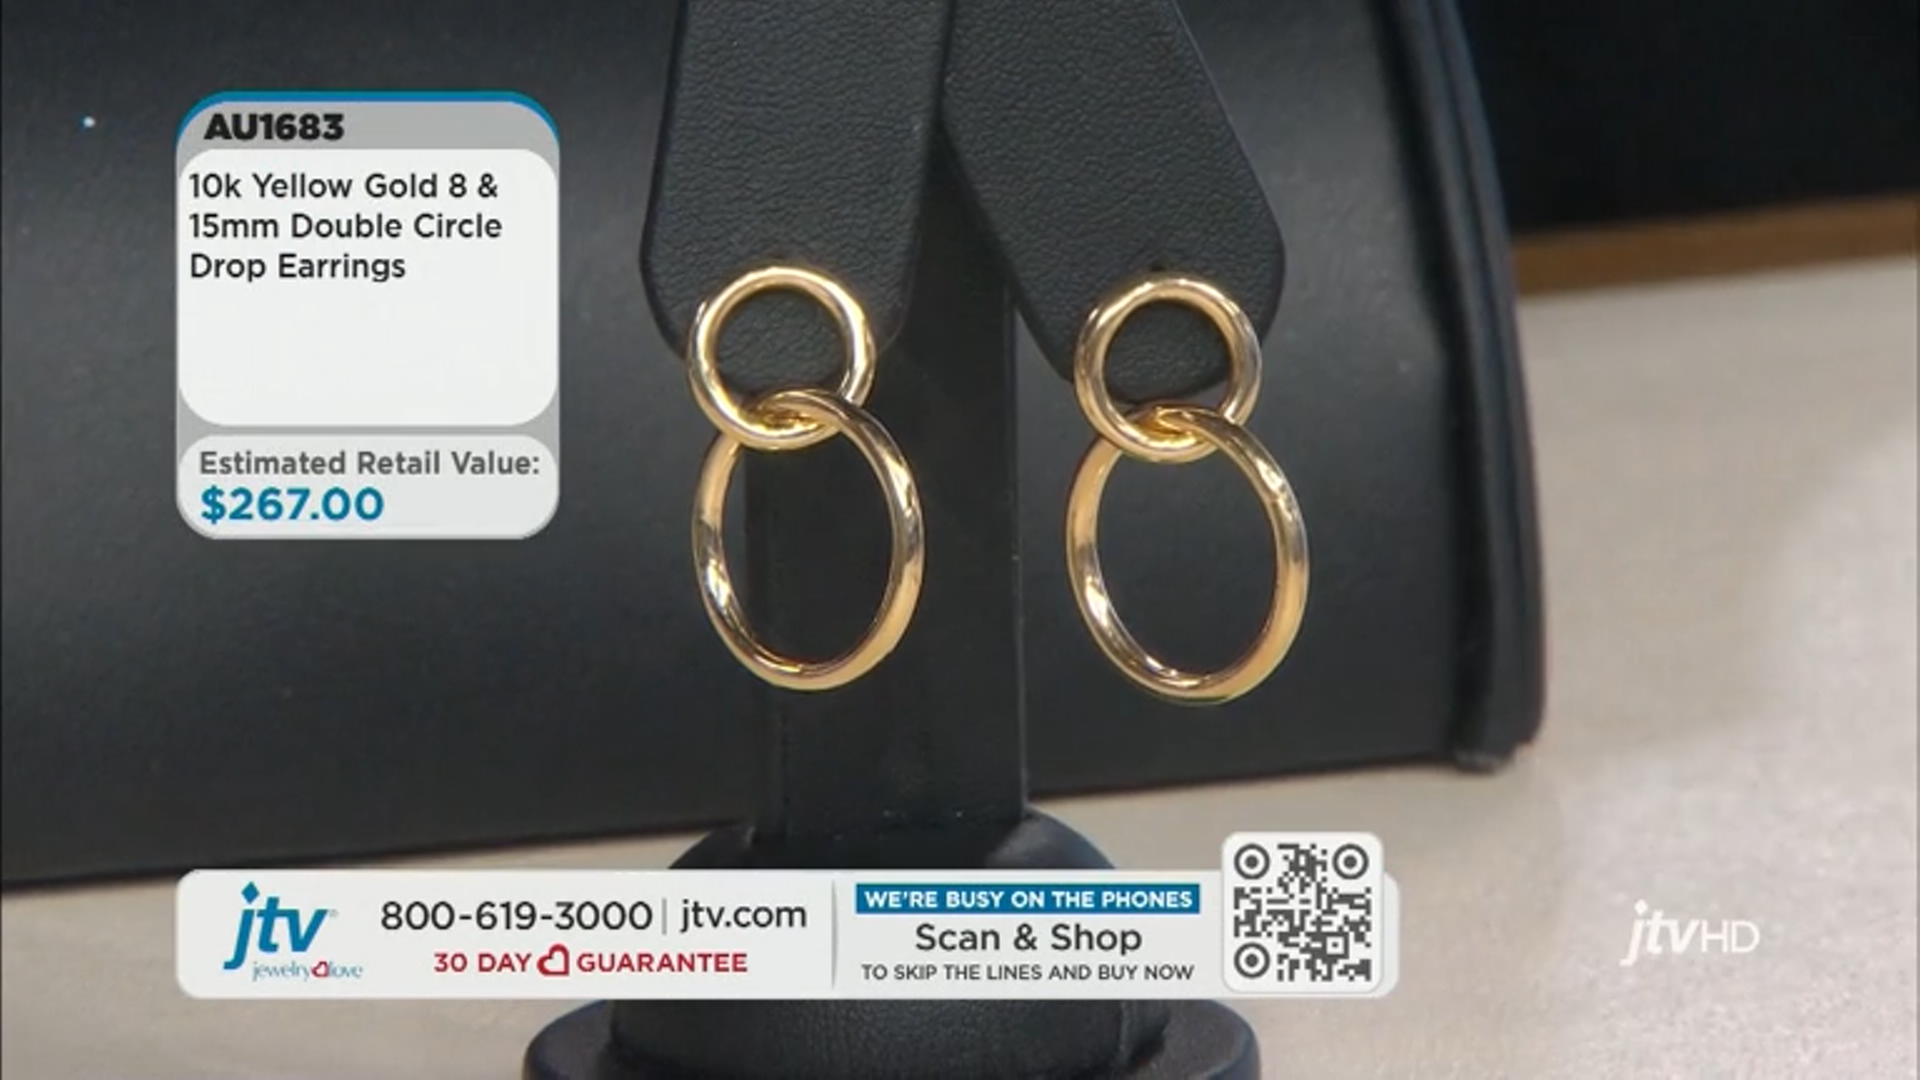 10k Yellow Gold 8 & 15mm Double Circle Drop Earrings Video Thumbnail